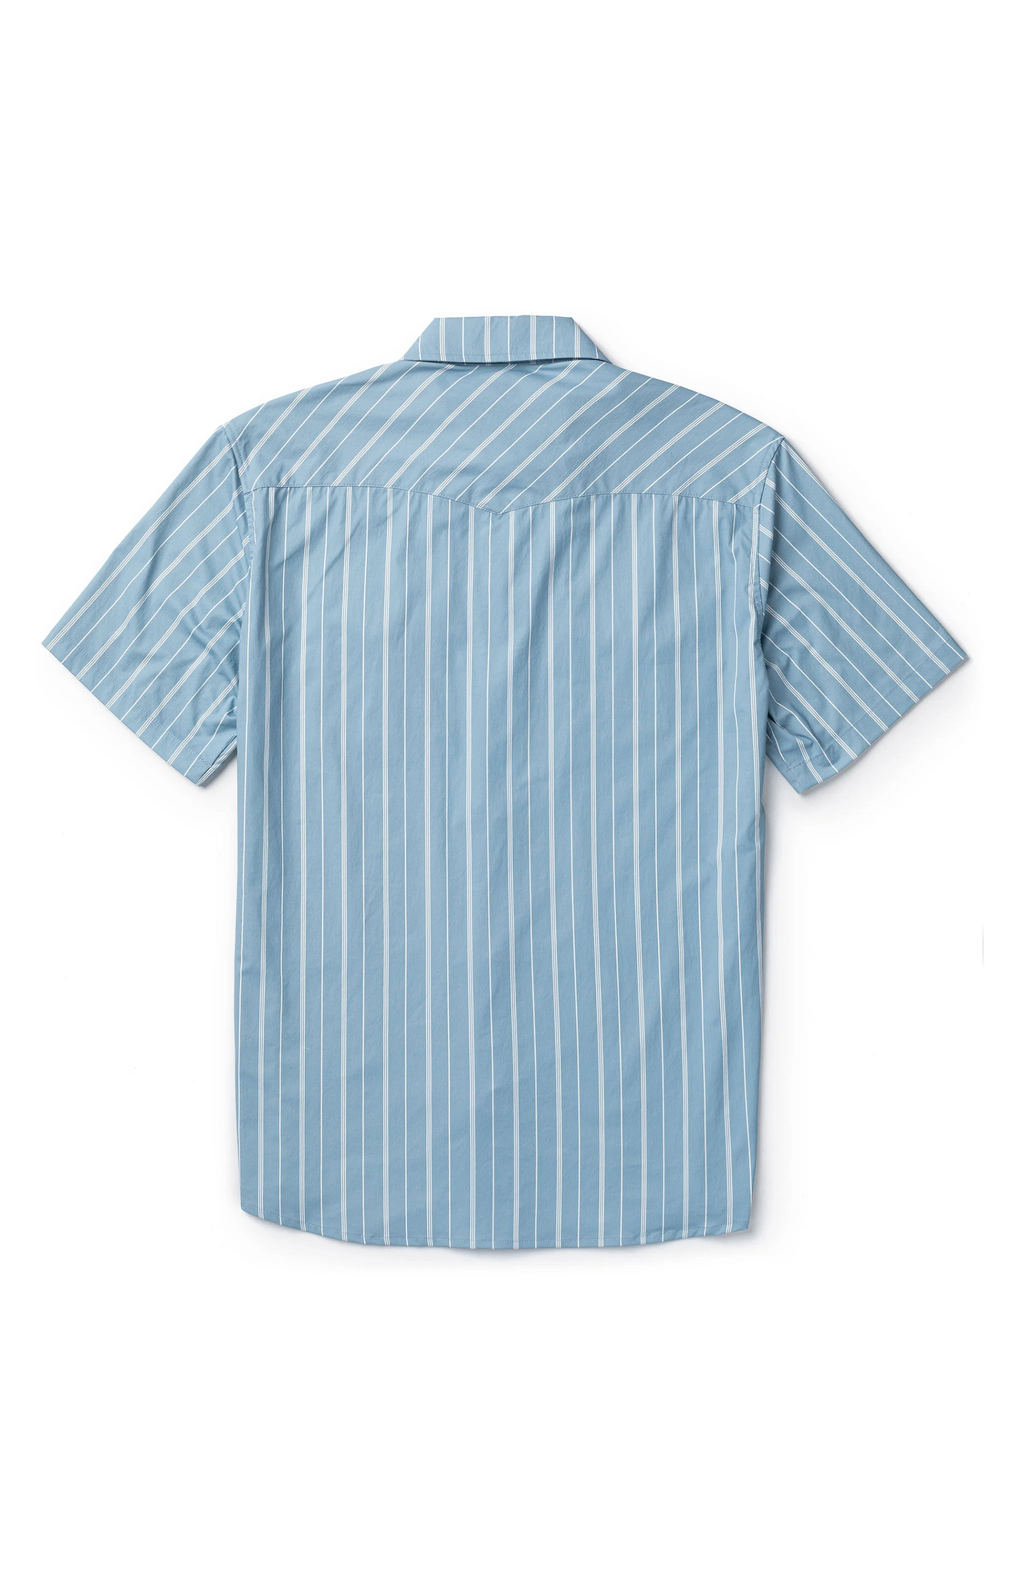 Seager - El Ranchero Short Sleeve Shirt